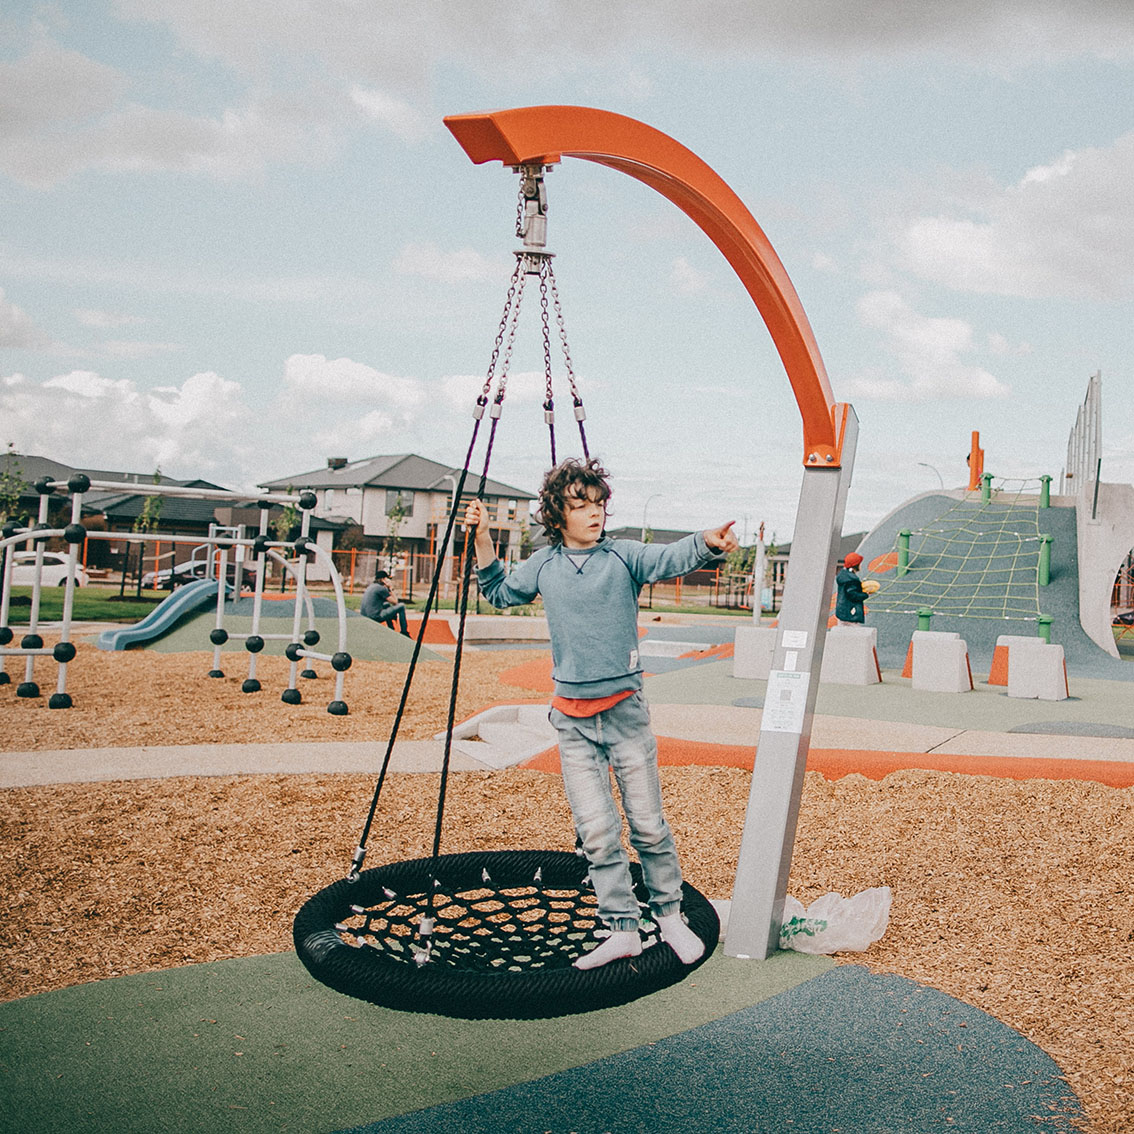  Universal Park Tarneit Boy Standing on round swing